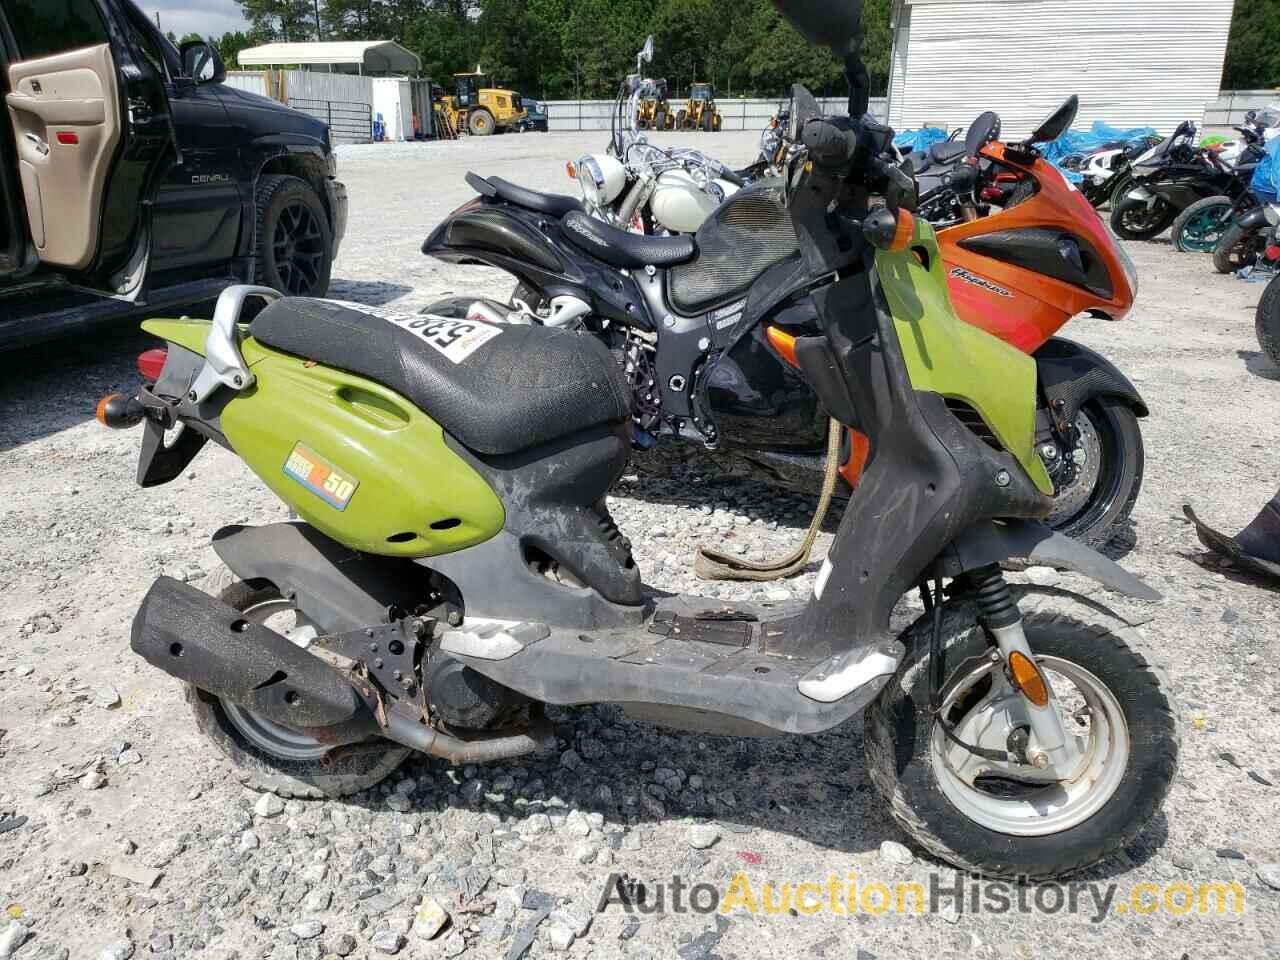 OTHR MOTORCYCLE 50, RFVPMP20891003014